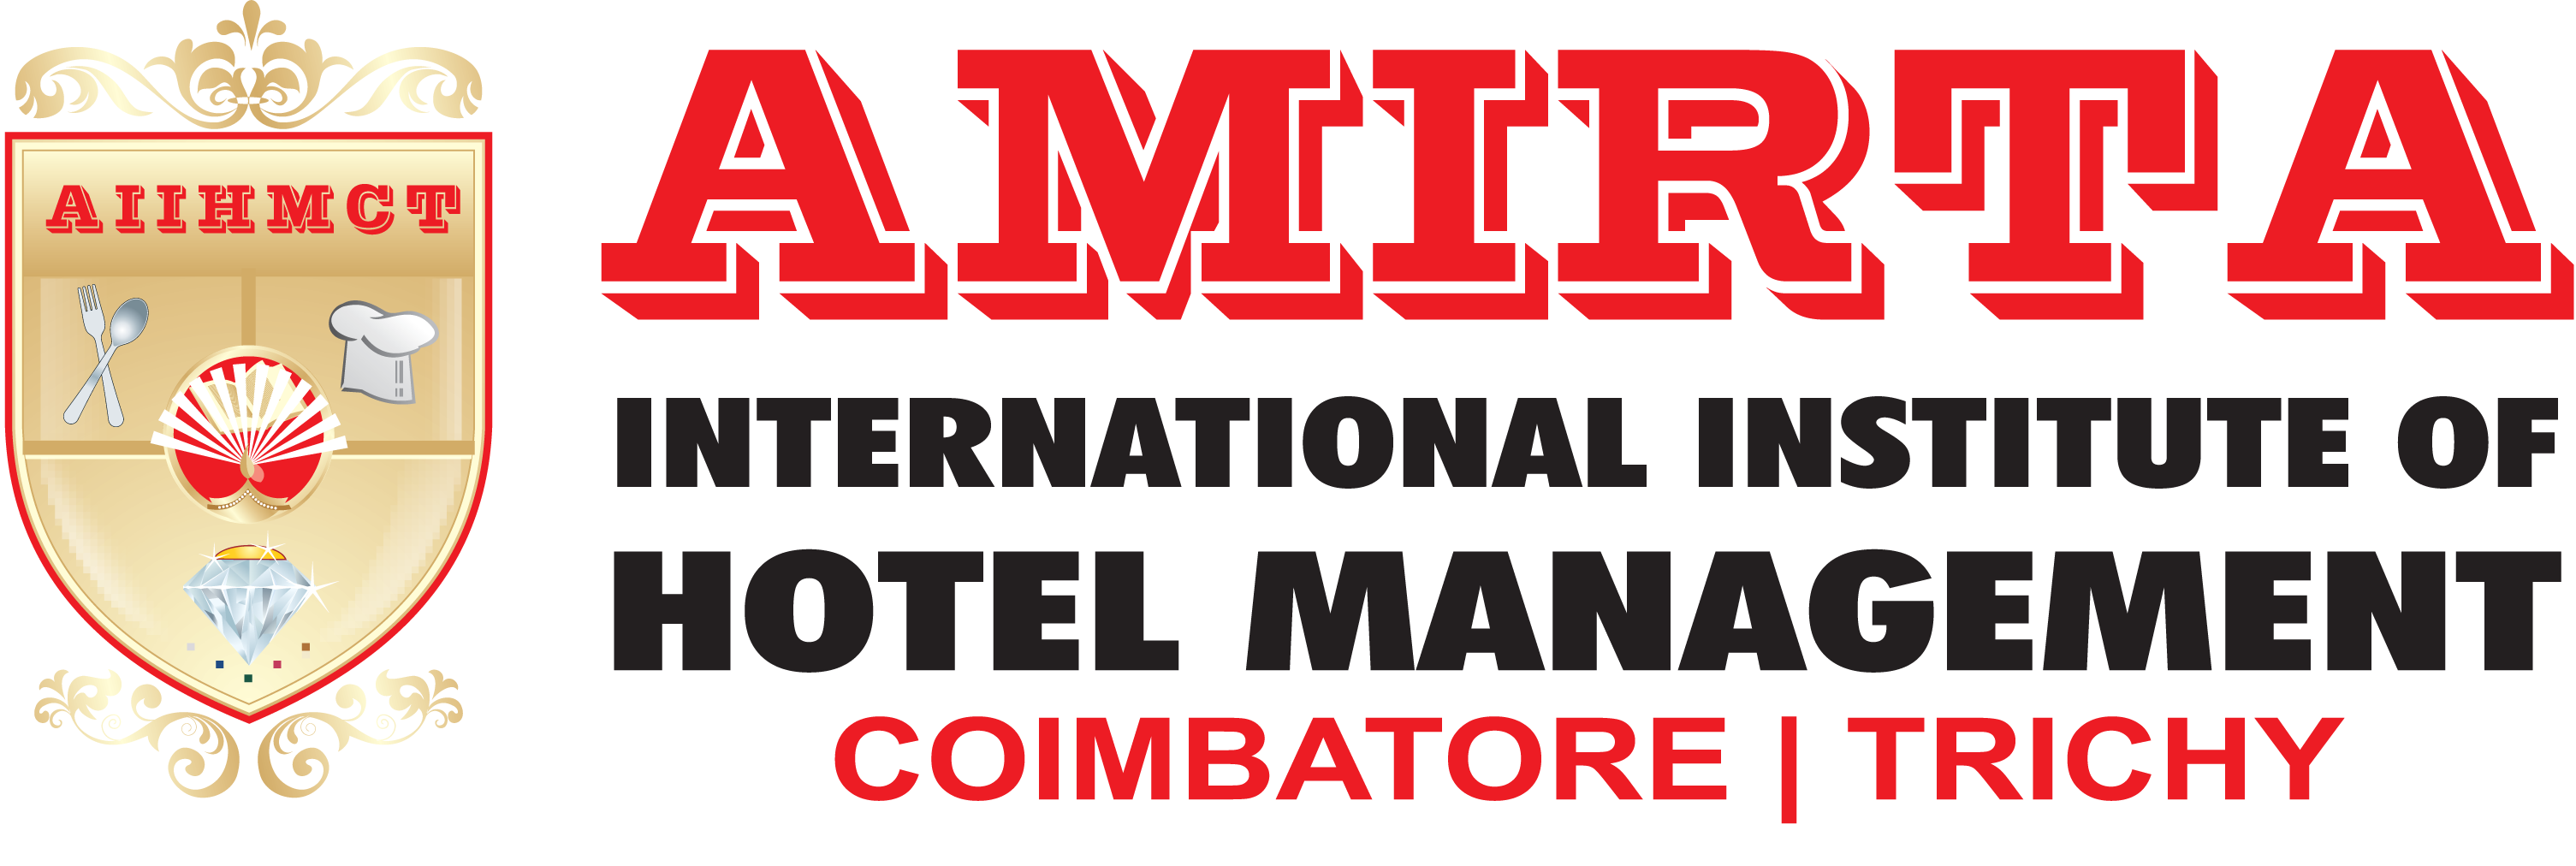 Amirta International Institute of Hotel Management Coimbatore Logo